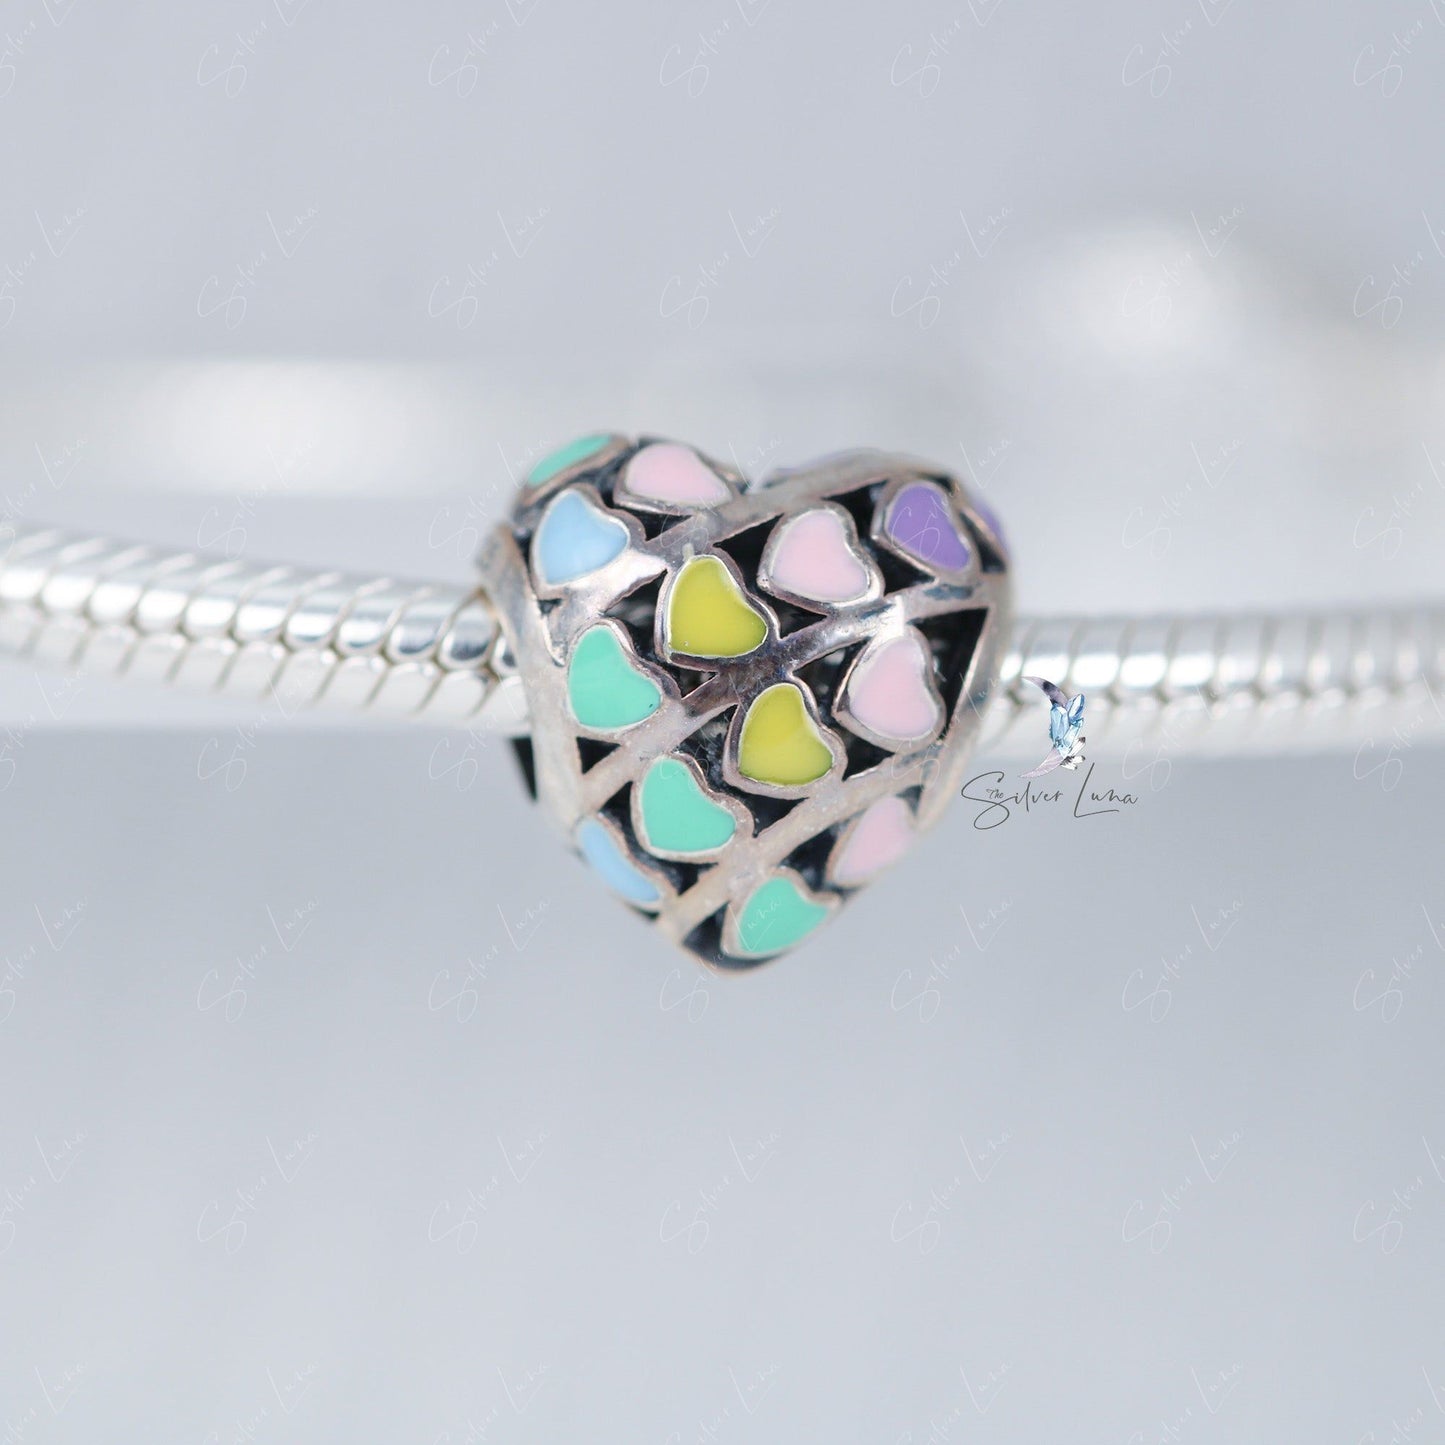 Rainbow sterling silver heart charm for bracelet